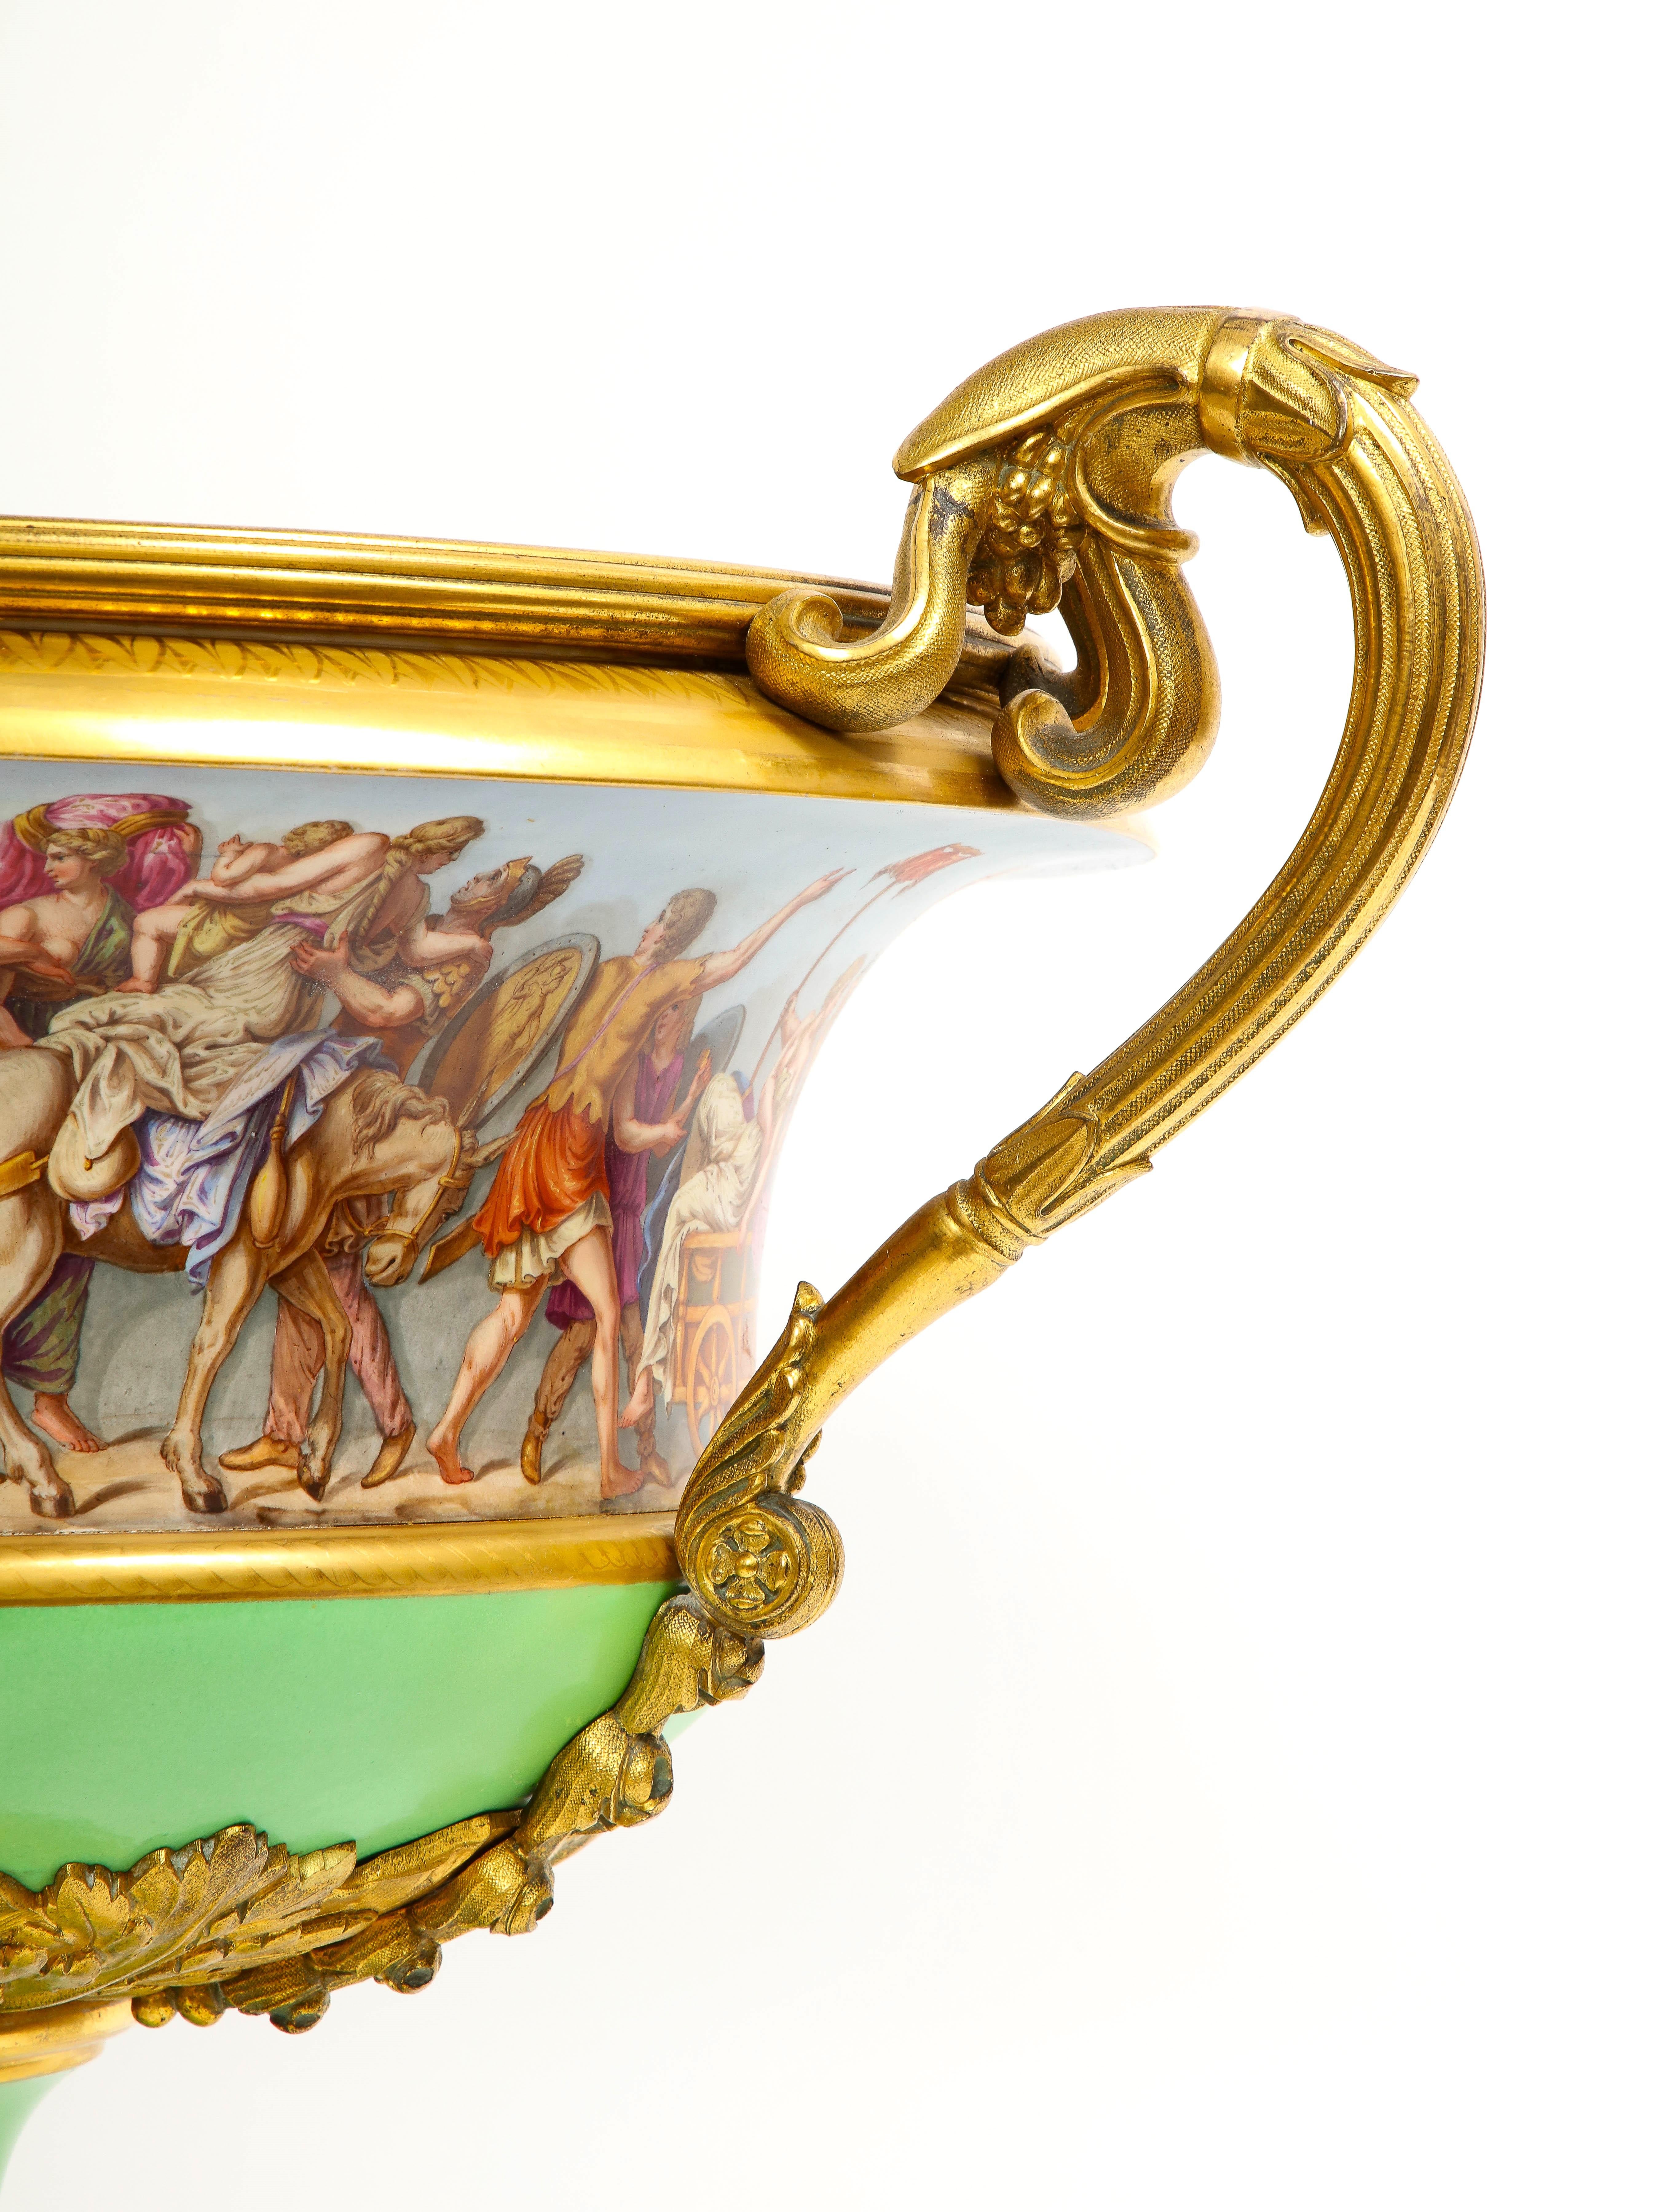 Monumental Sevres Porcelain Ormolu-Mounted 2-Handle Campana Form Centerpiece For Sale 4